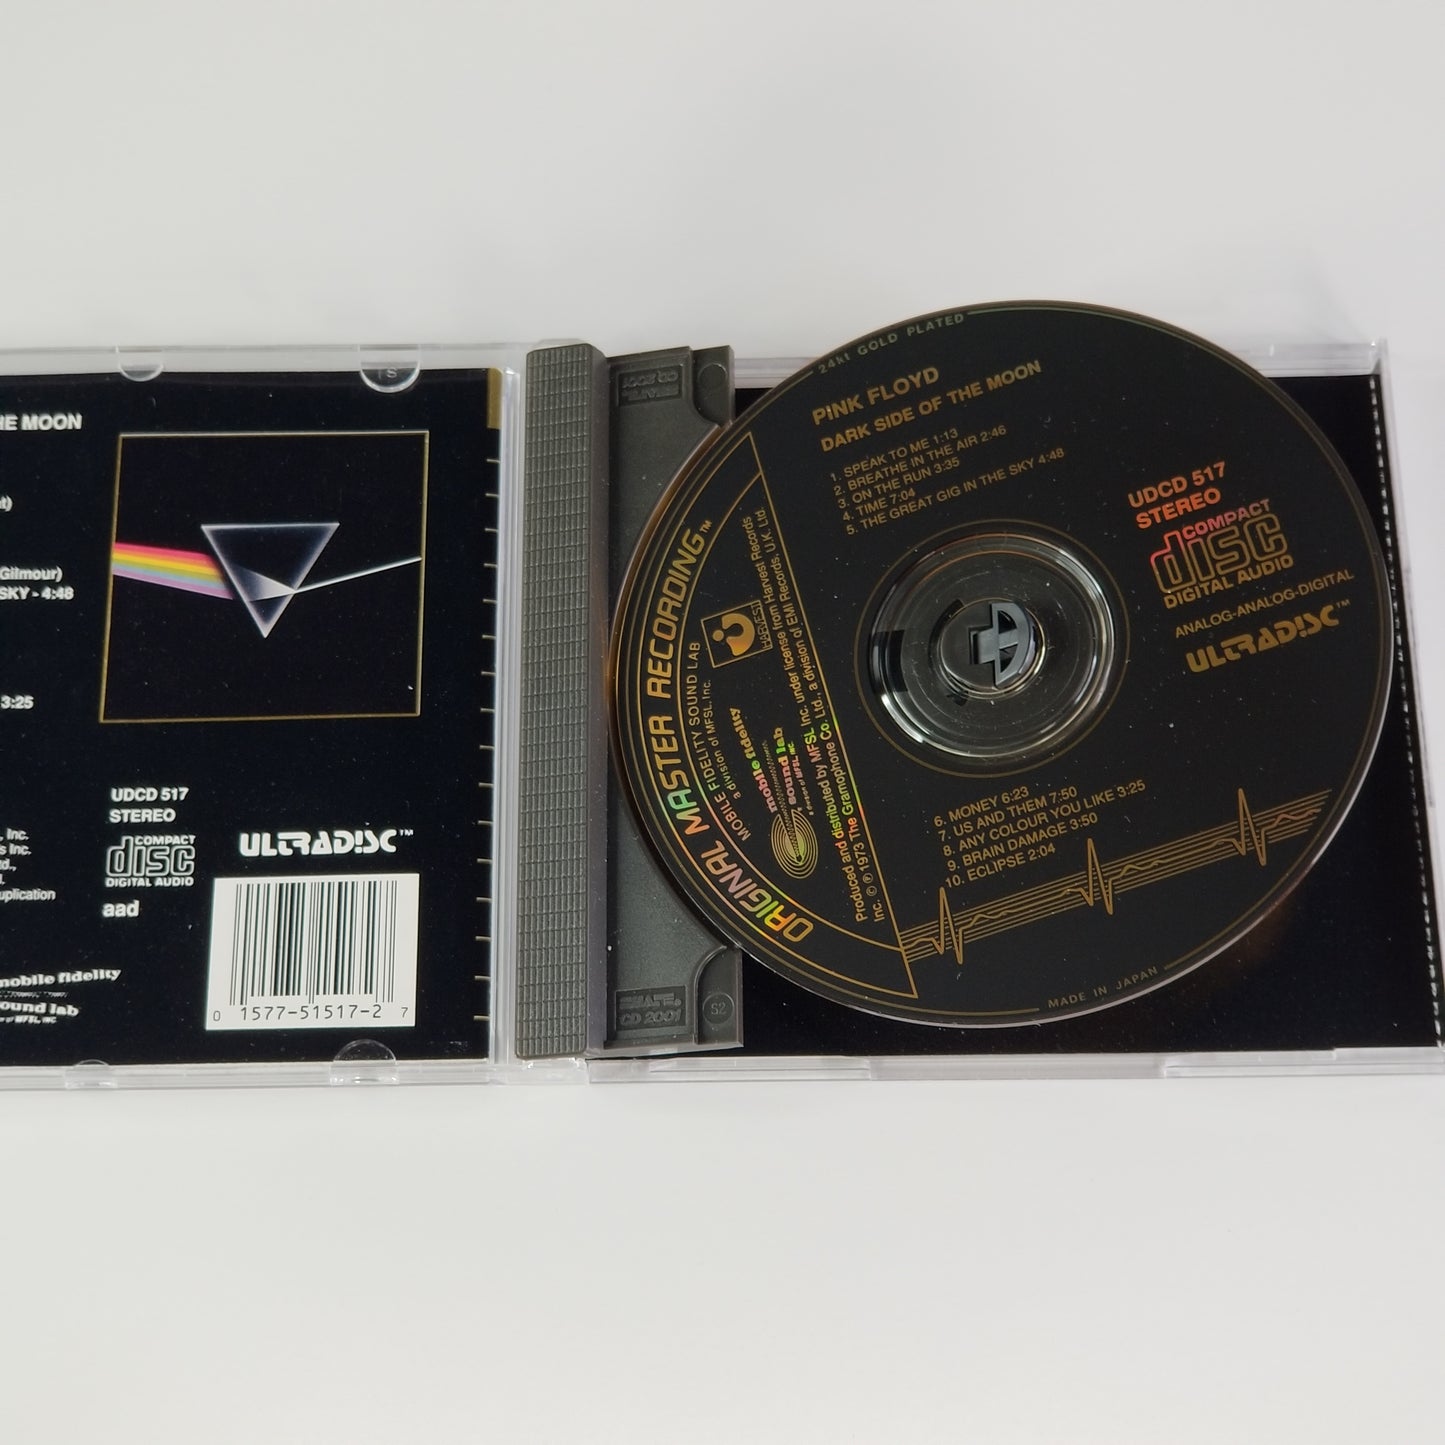 Pink Floyd – Dark Side Of The Moon Original Master (1993, CD) UDCD 517 MFSL